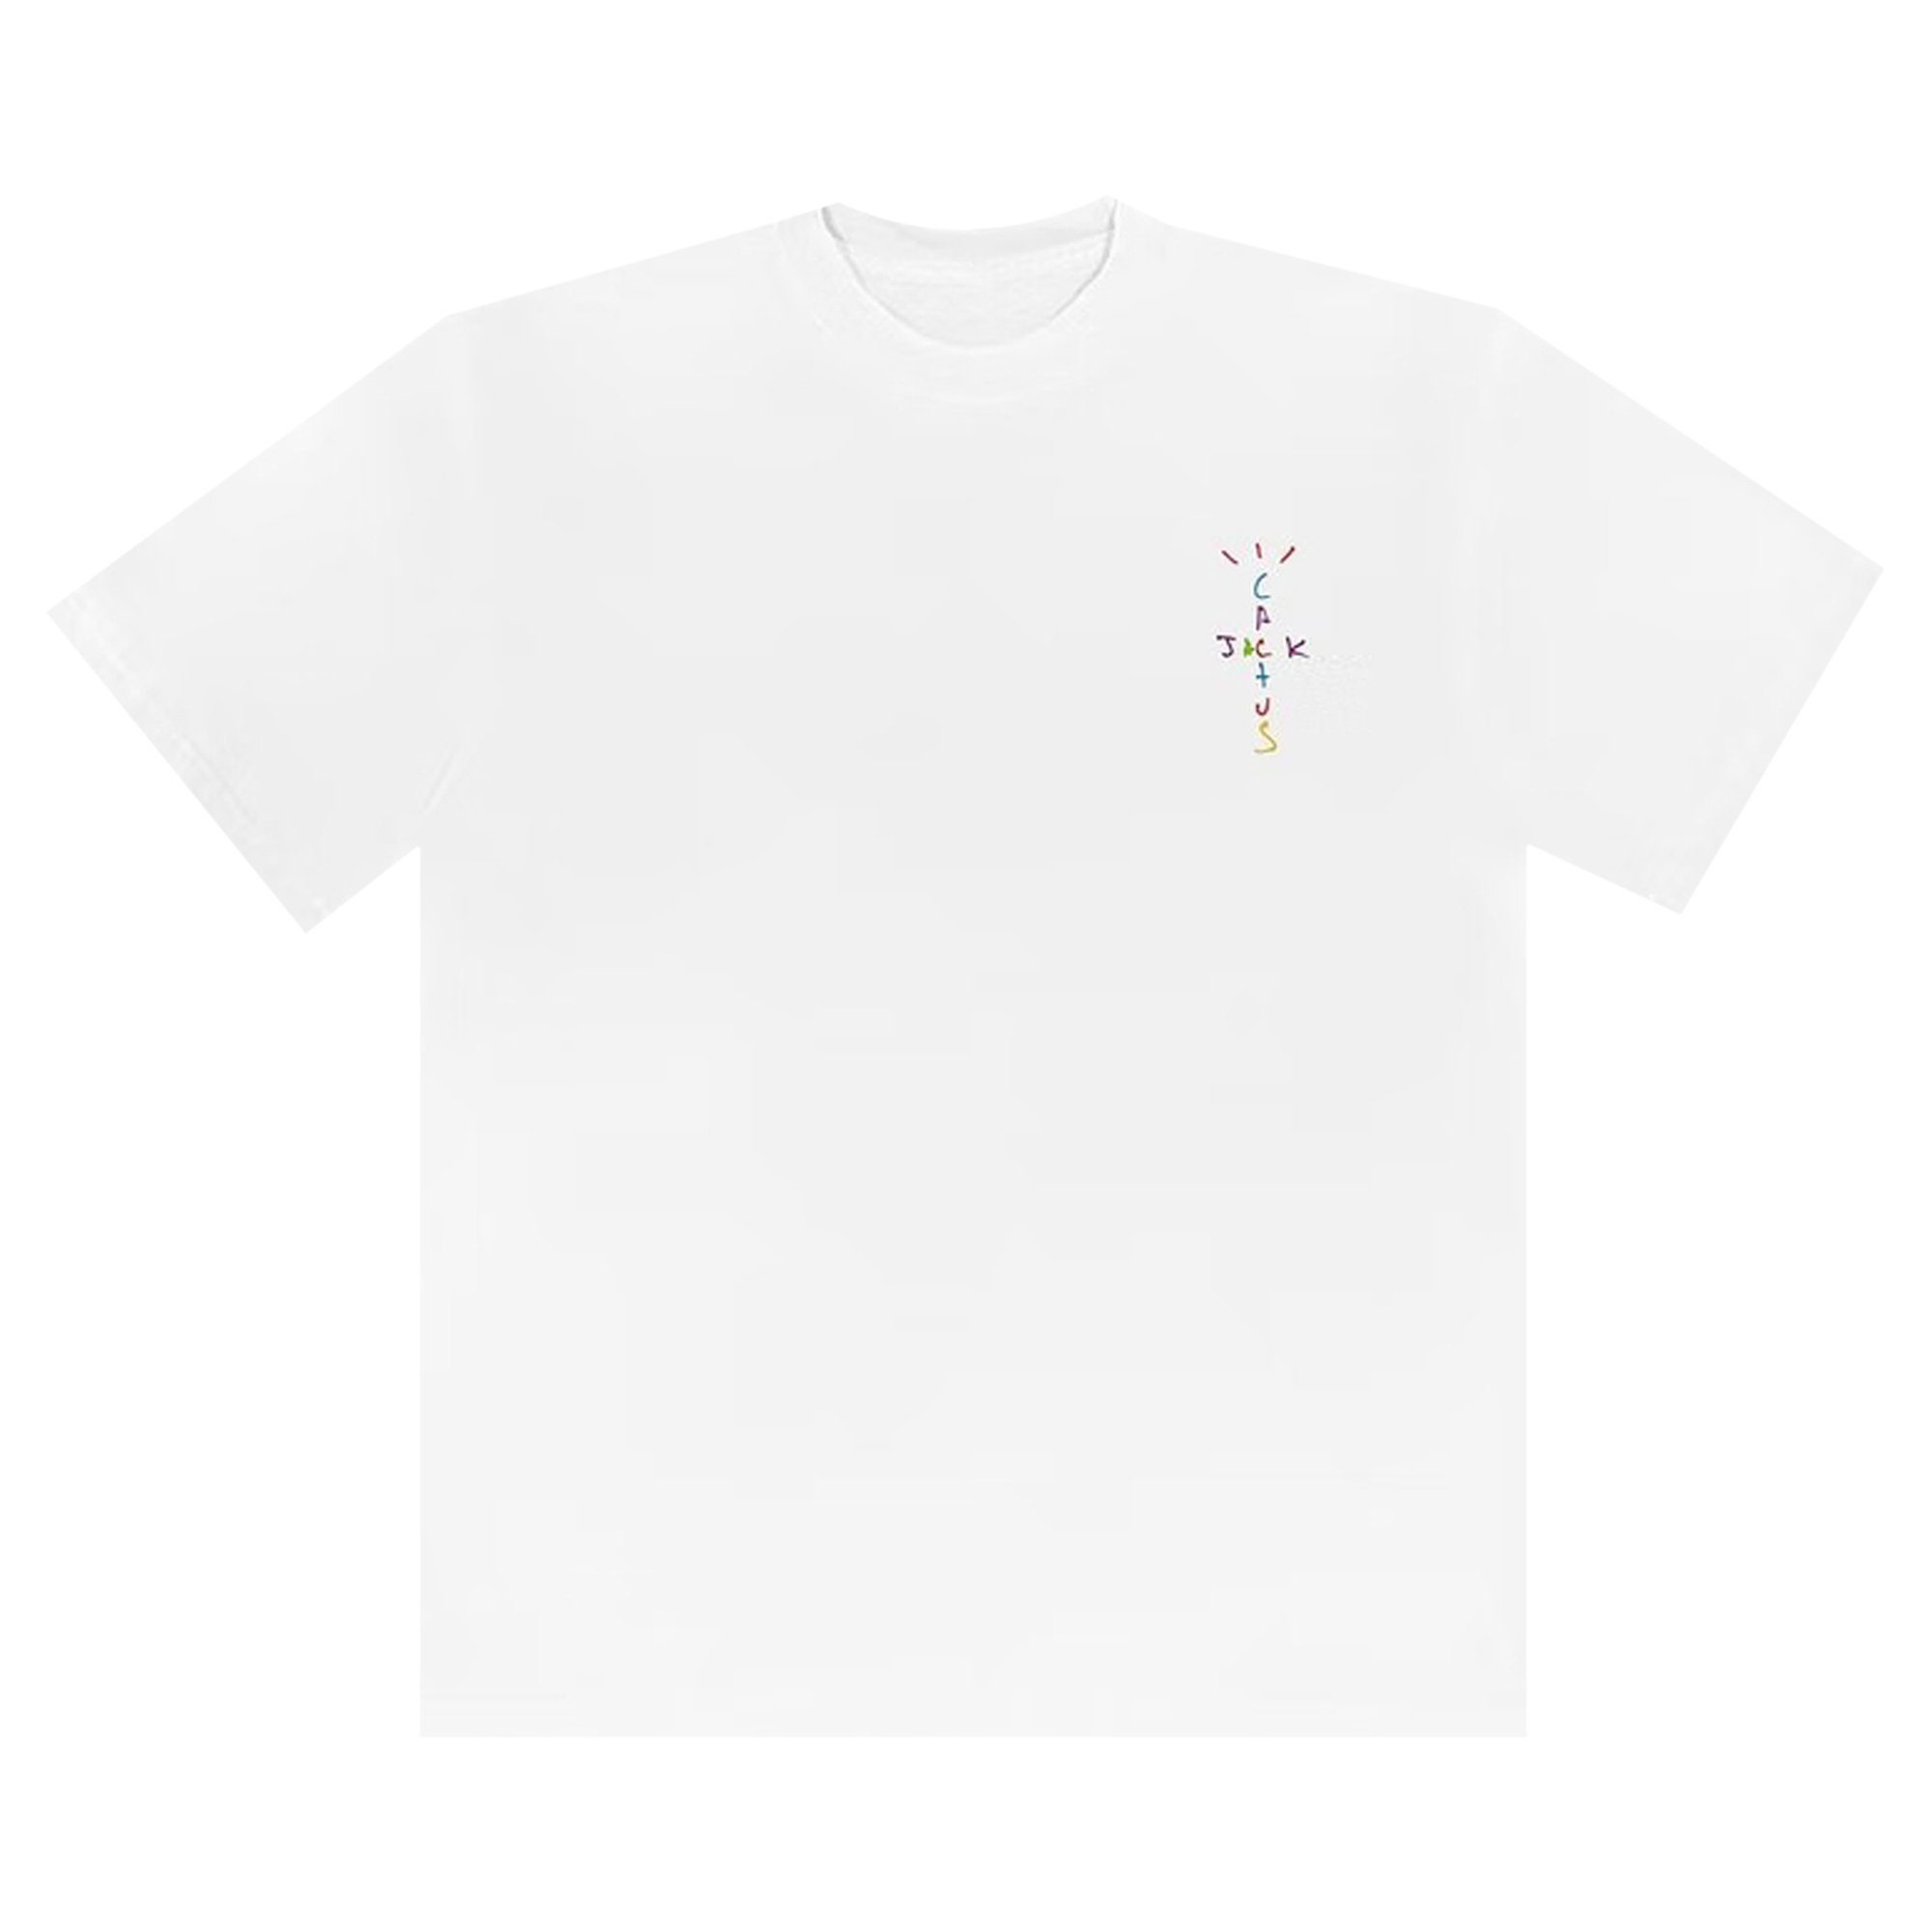 Buy Cactus Jack by Travis Scott x McDonald's Smile T-Shirt 'White ...